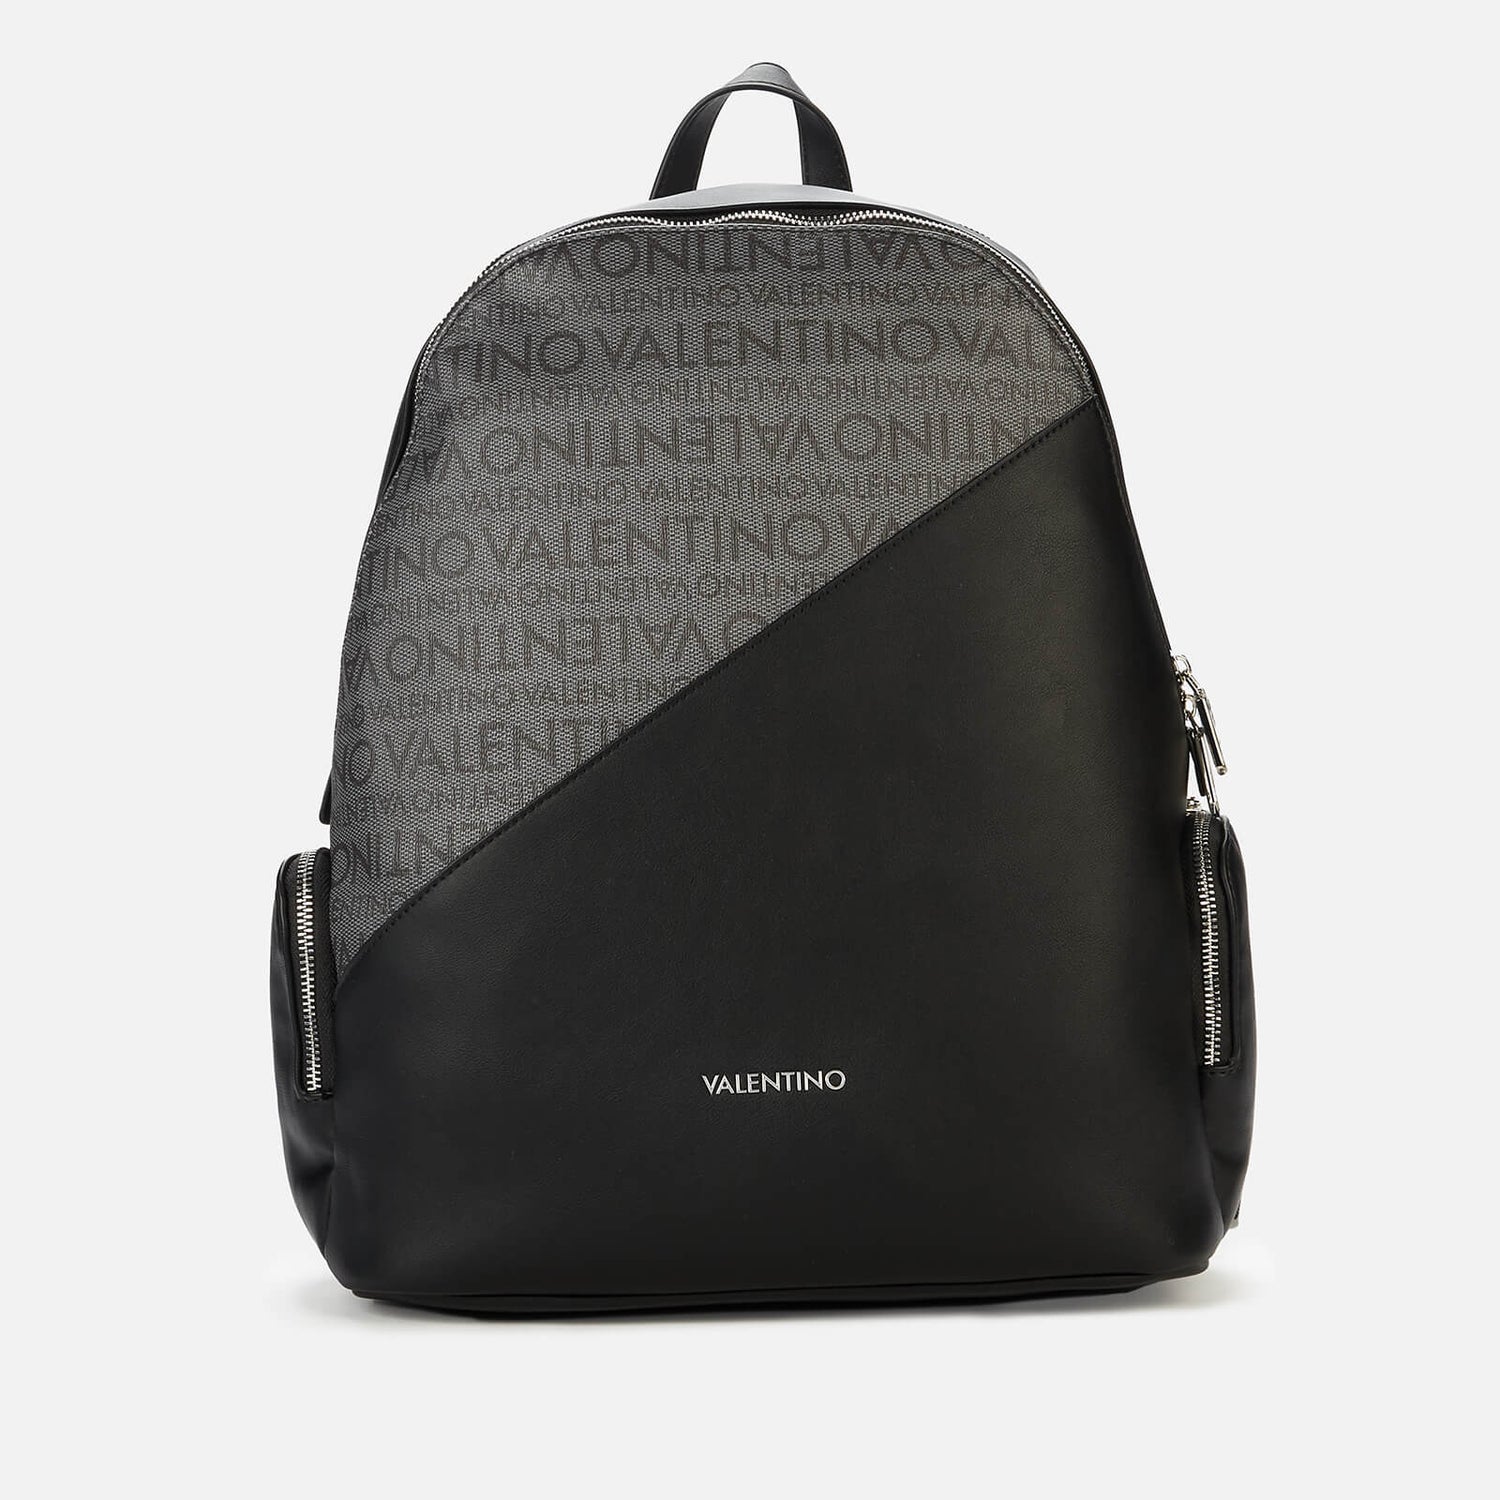 Valentino Men's Dry Backpack - Black Multi